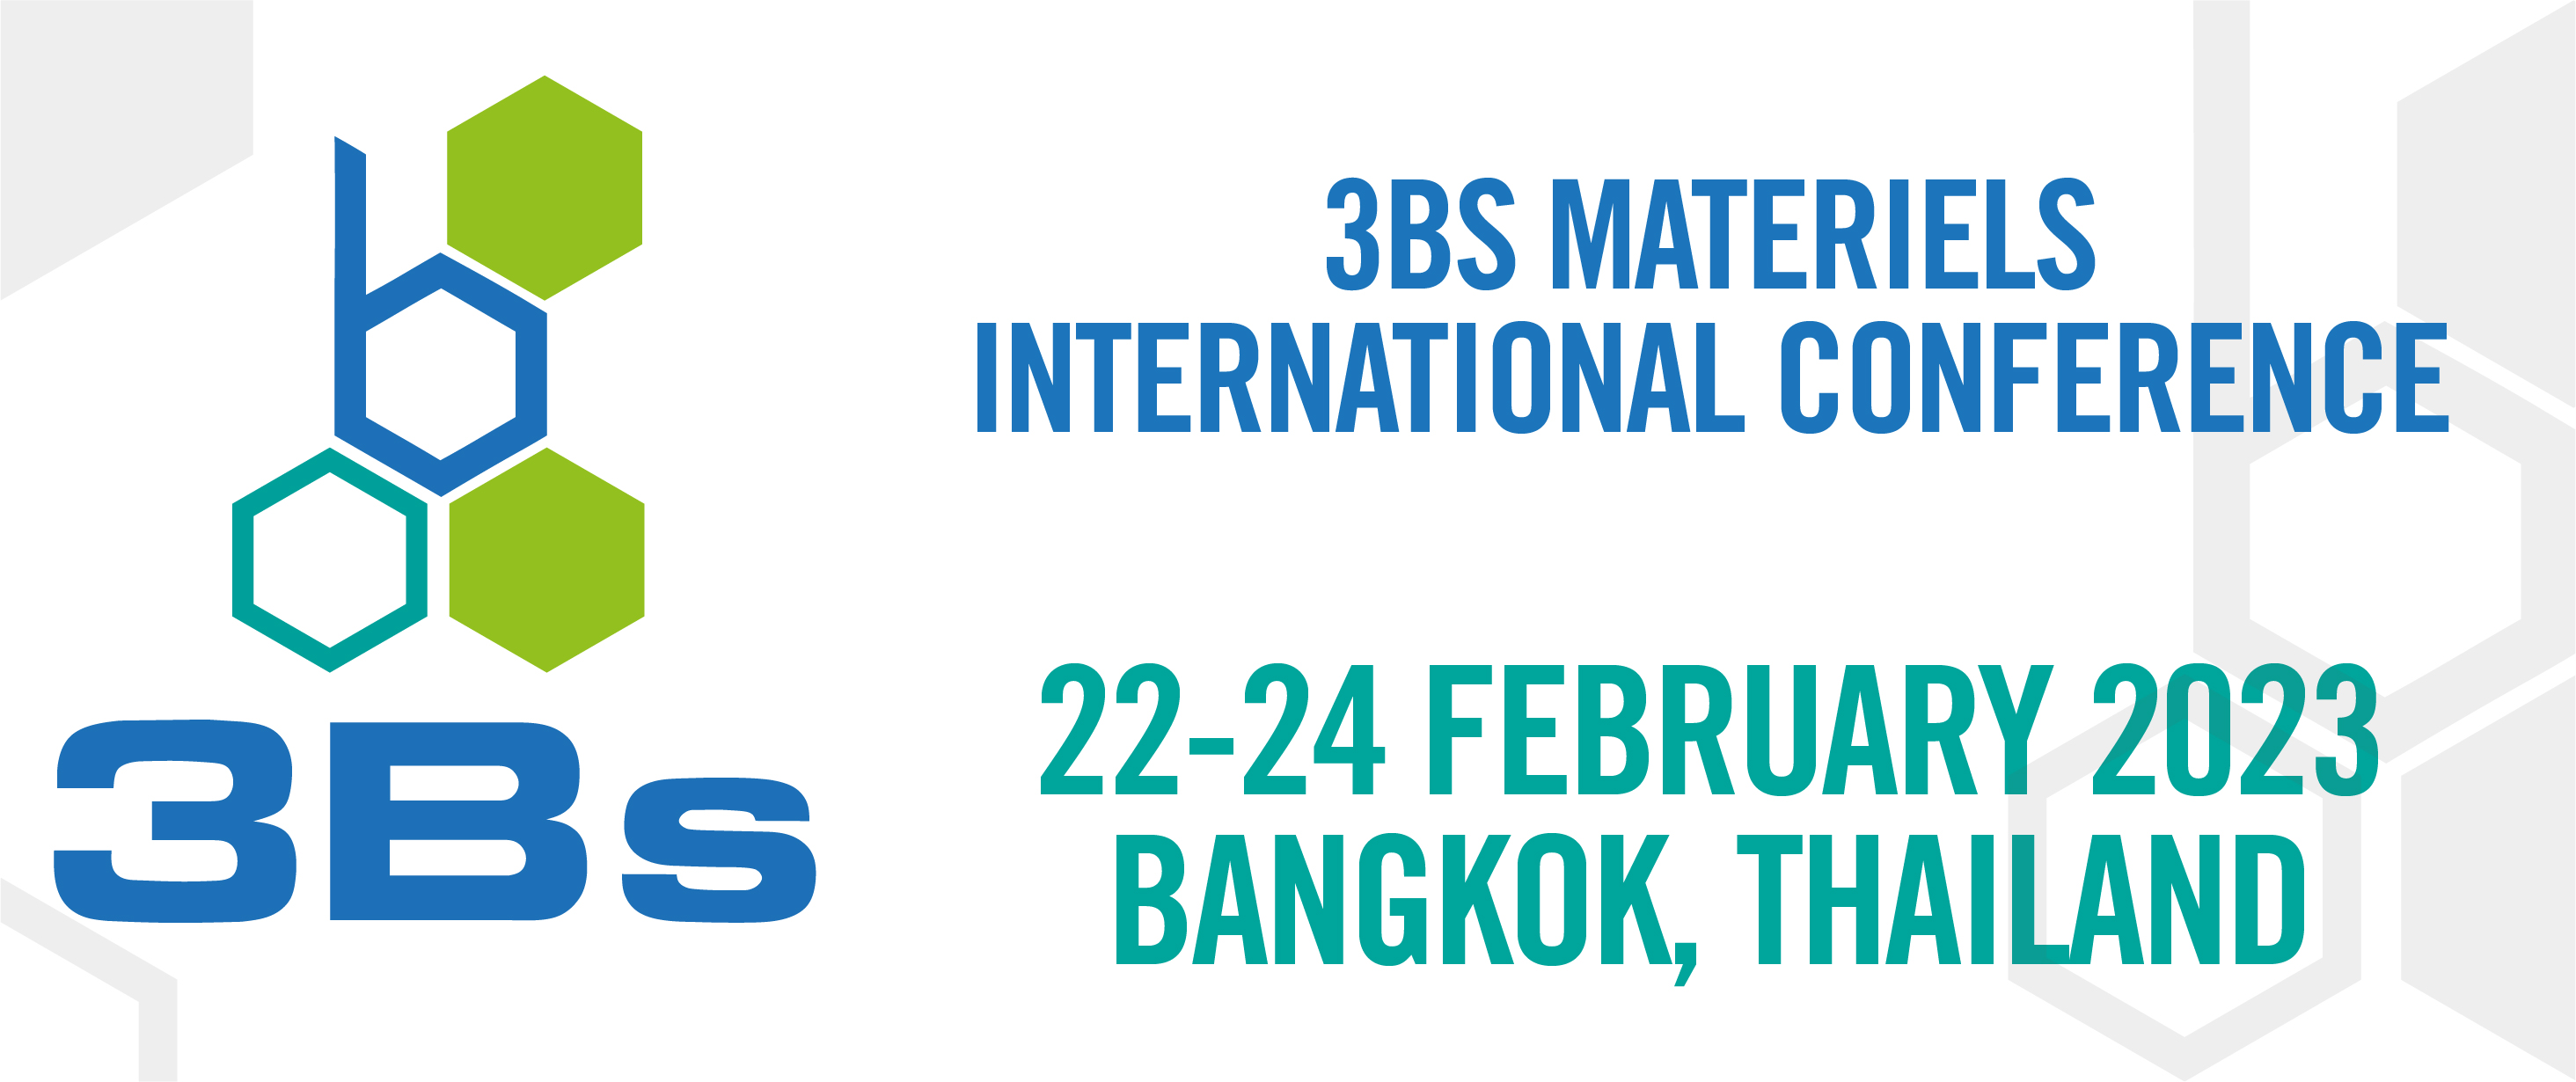 Biomaterials, Biodegradables and Biomimetics International Conference - 3Bs Materials 2023